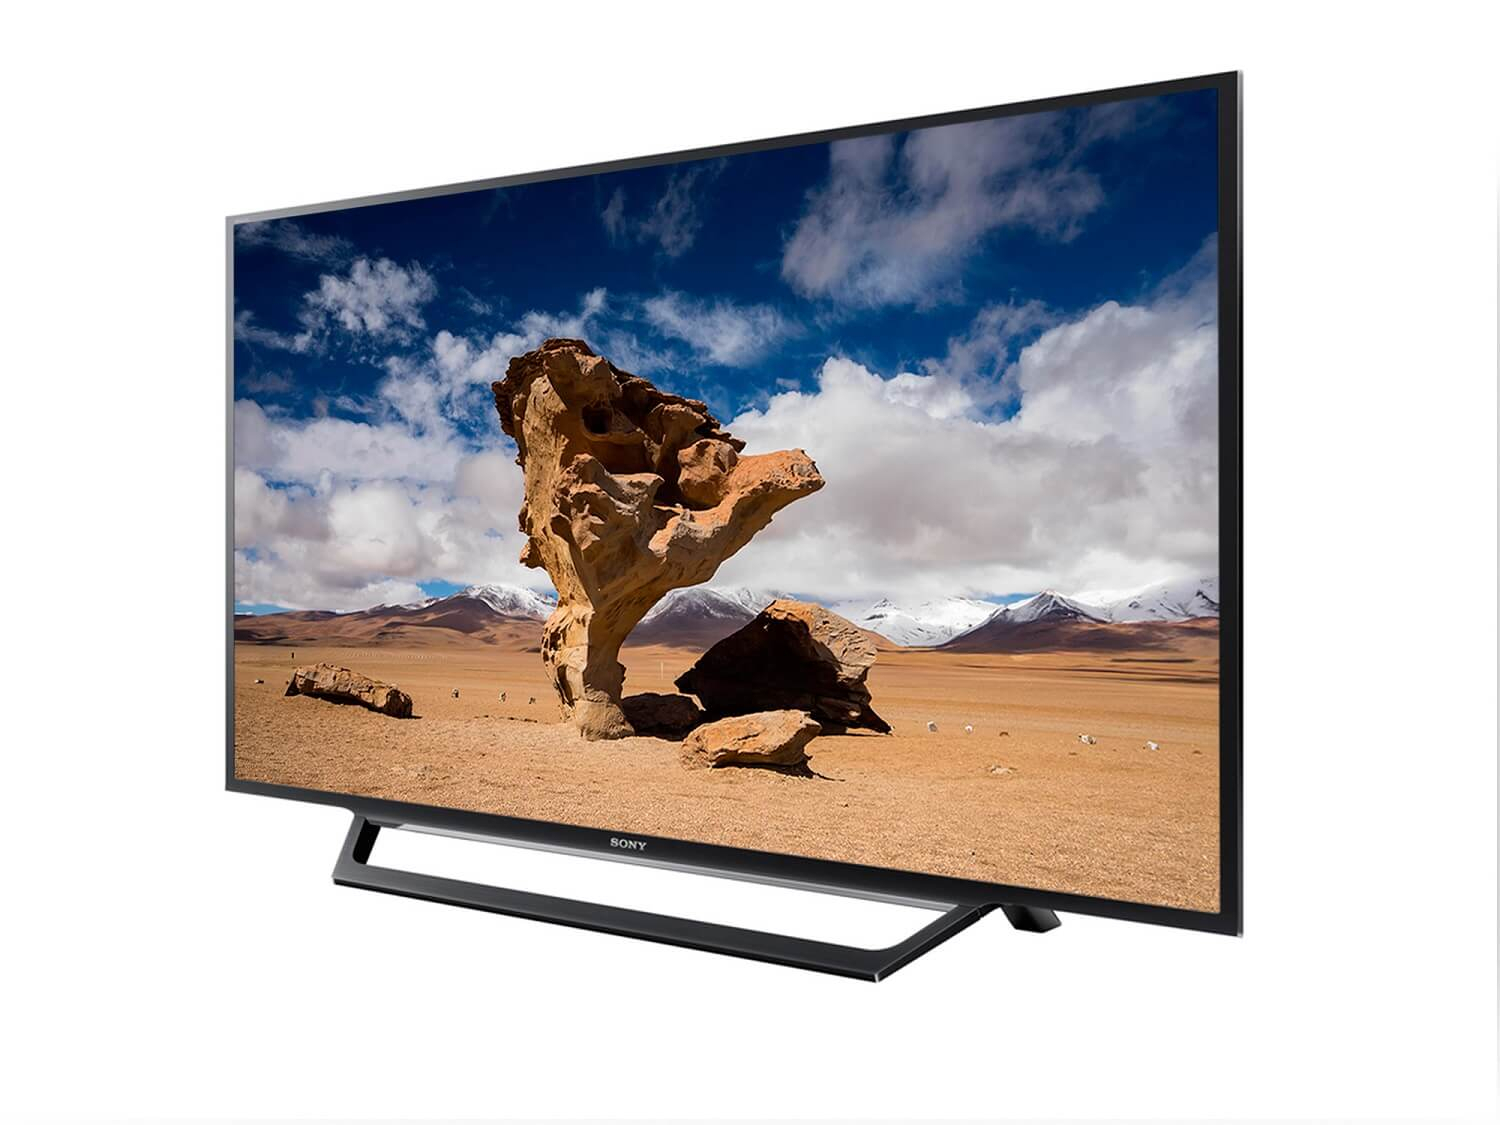 Pantalla Smart TV SONY KDL-32W600D 32 Pulgadas LCD HD Ready